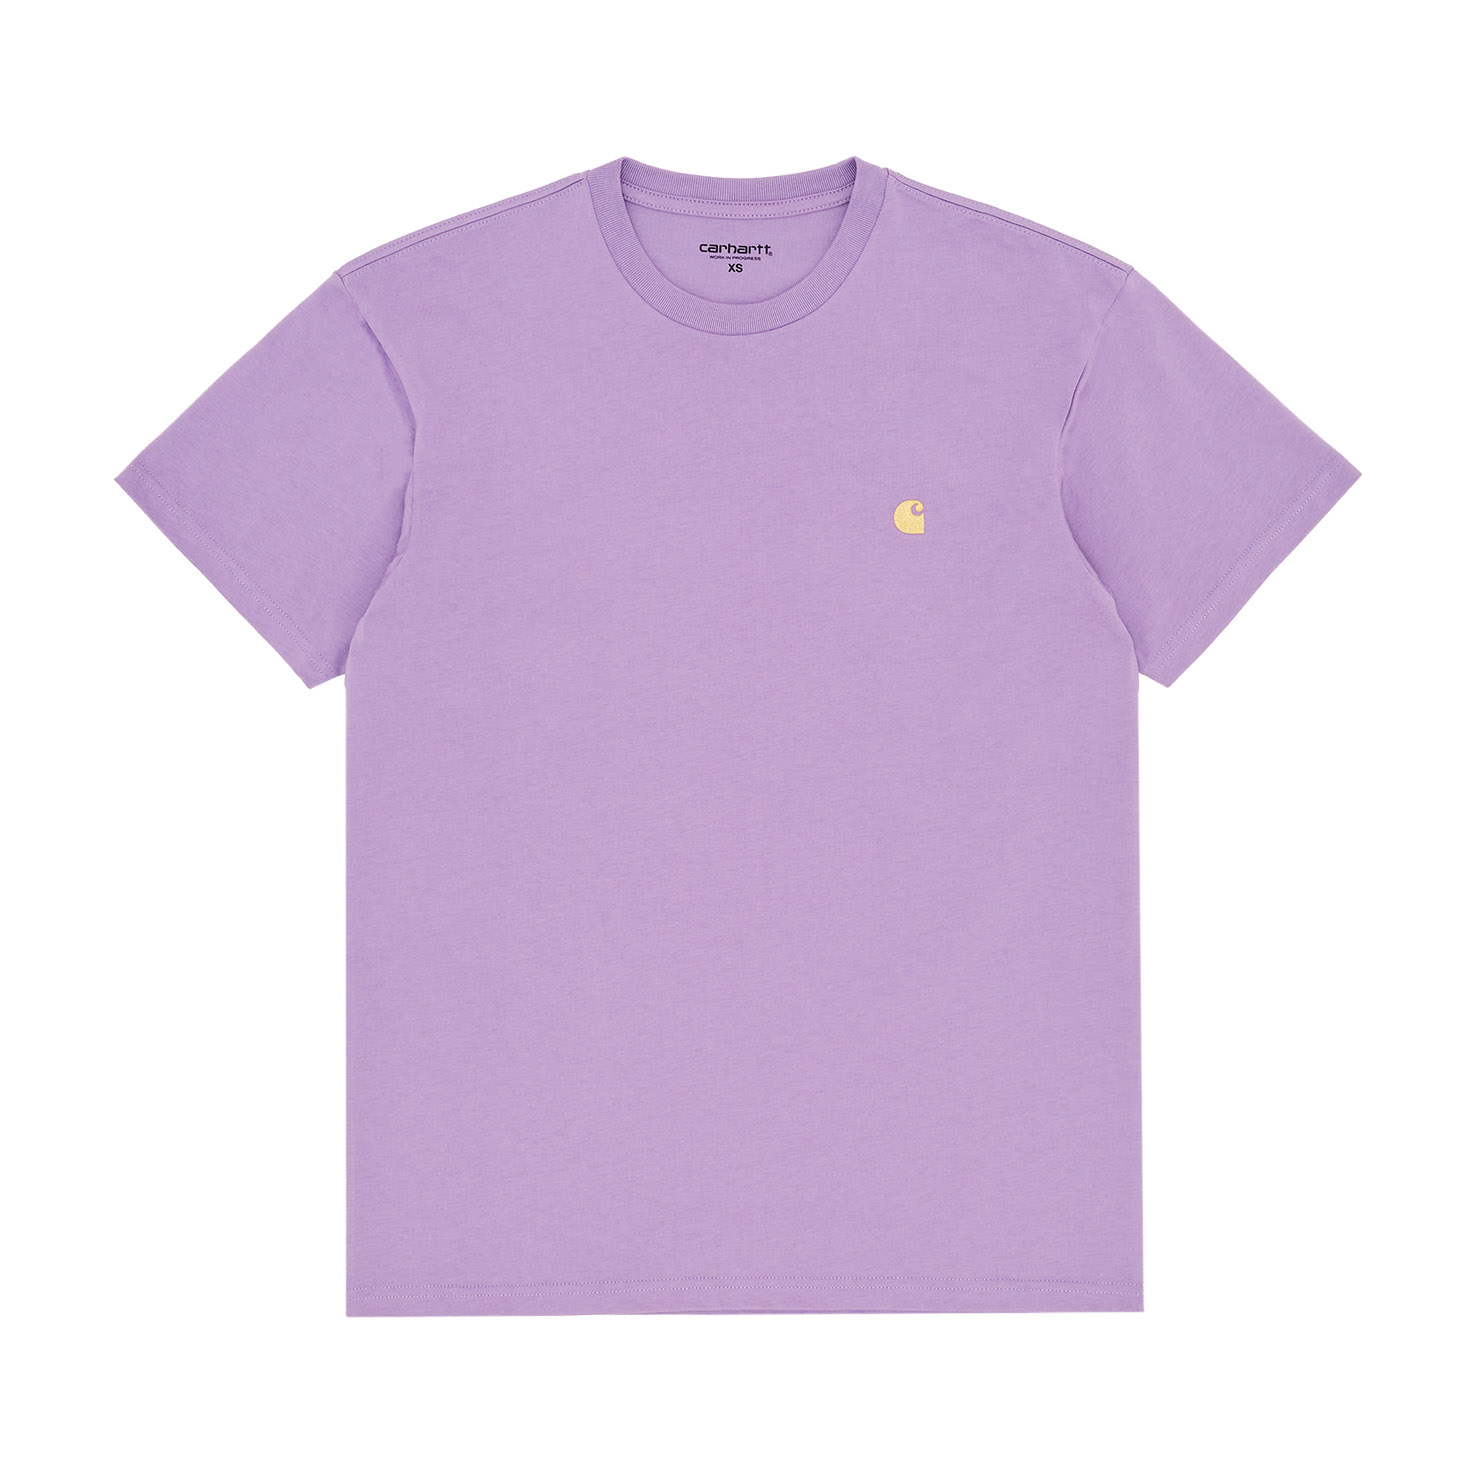 S/S Chase T-Shirt CARHARTT фиолетового цвета